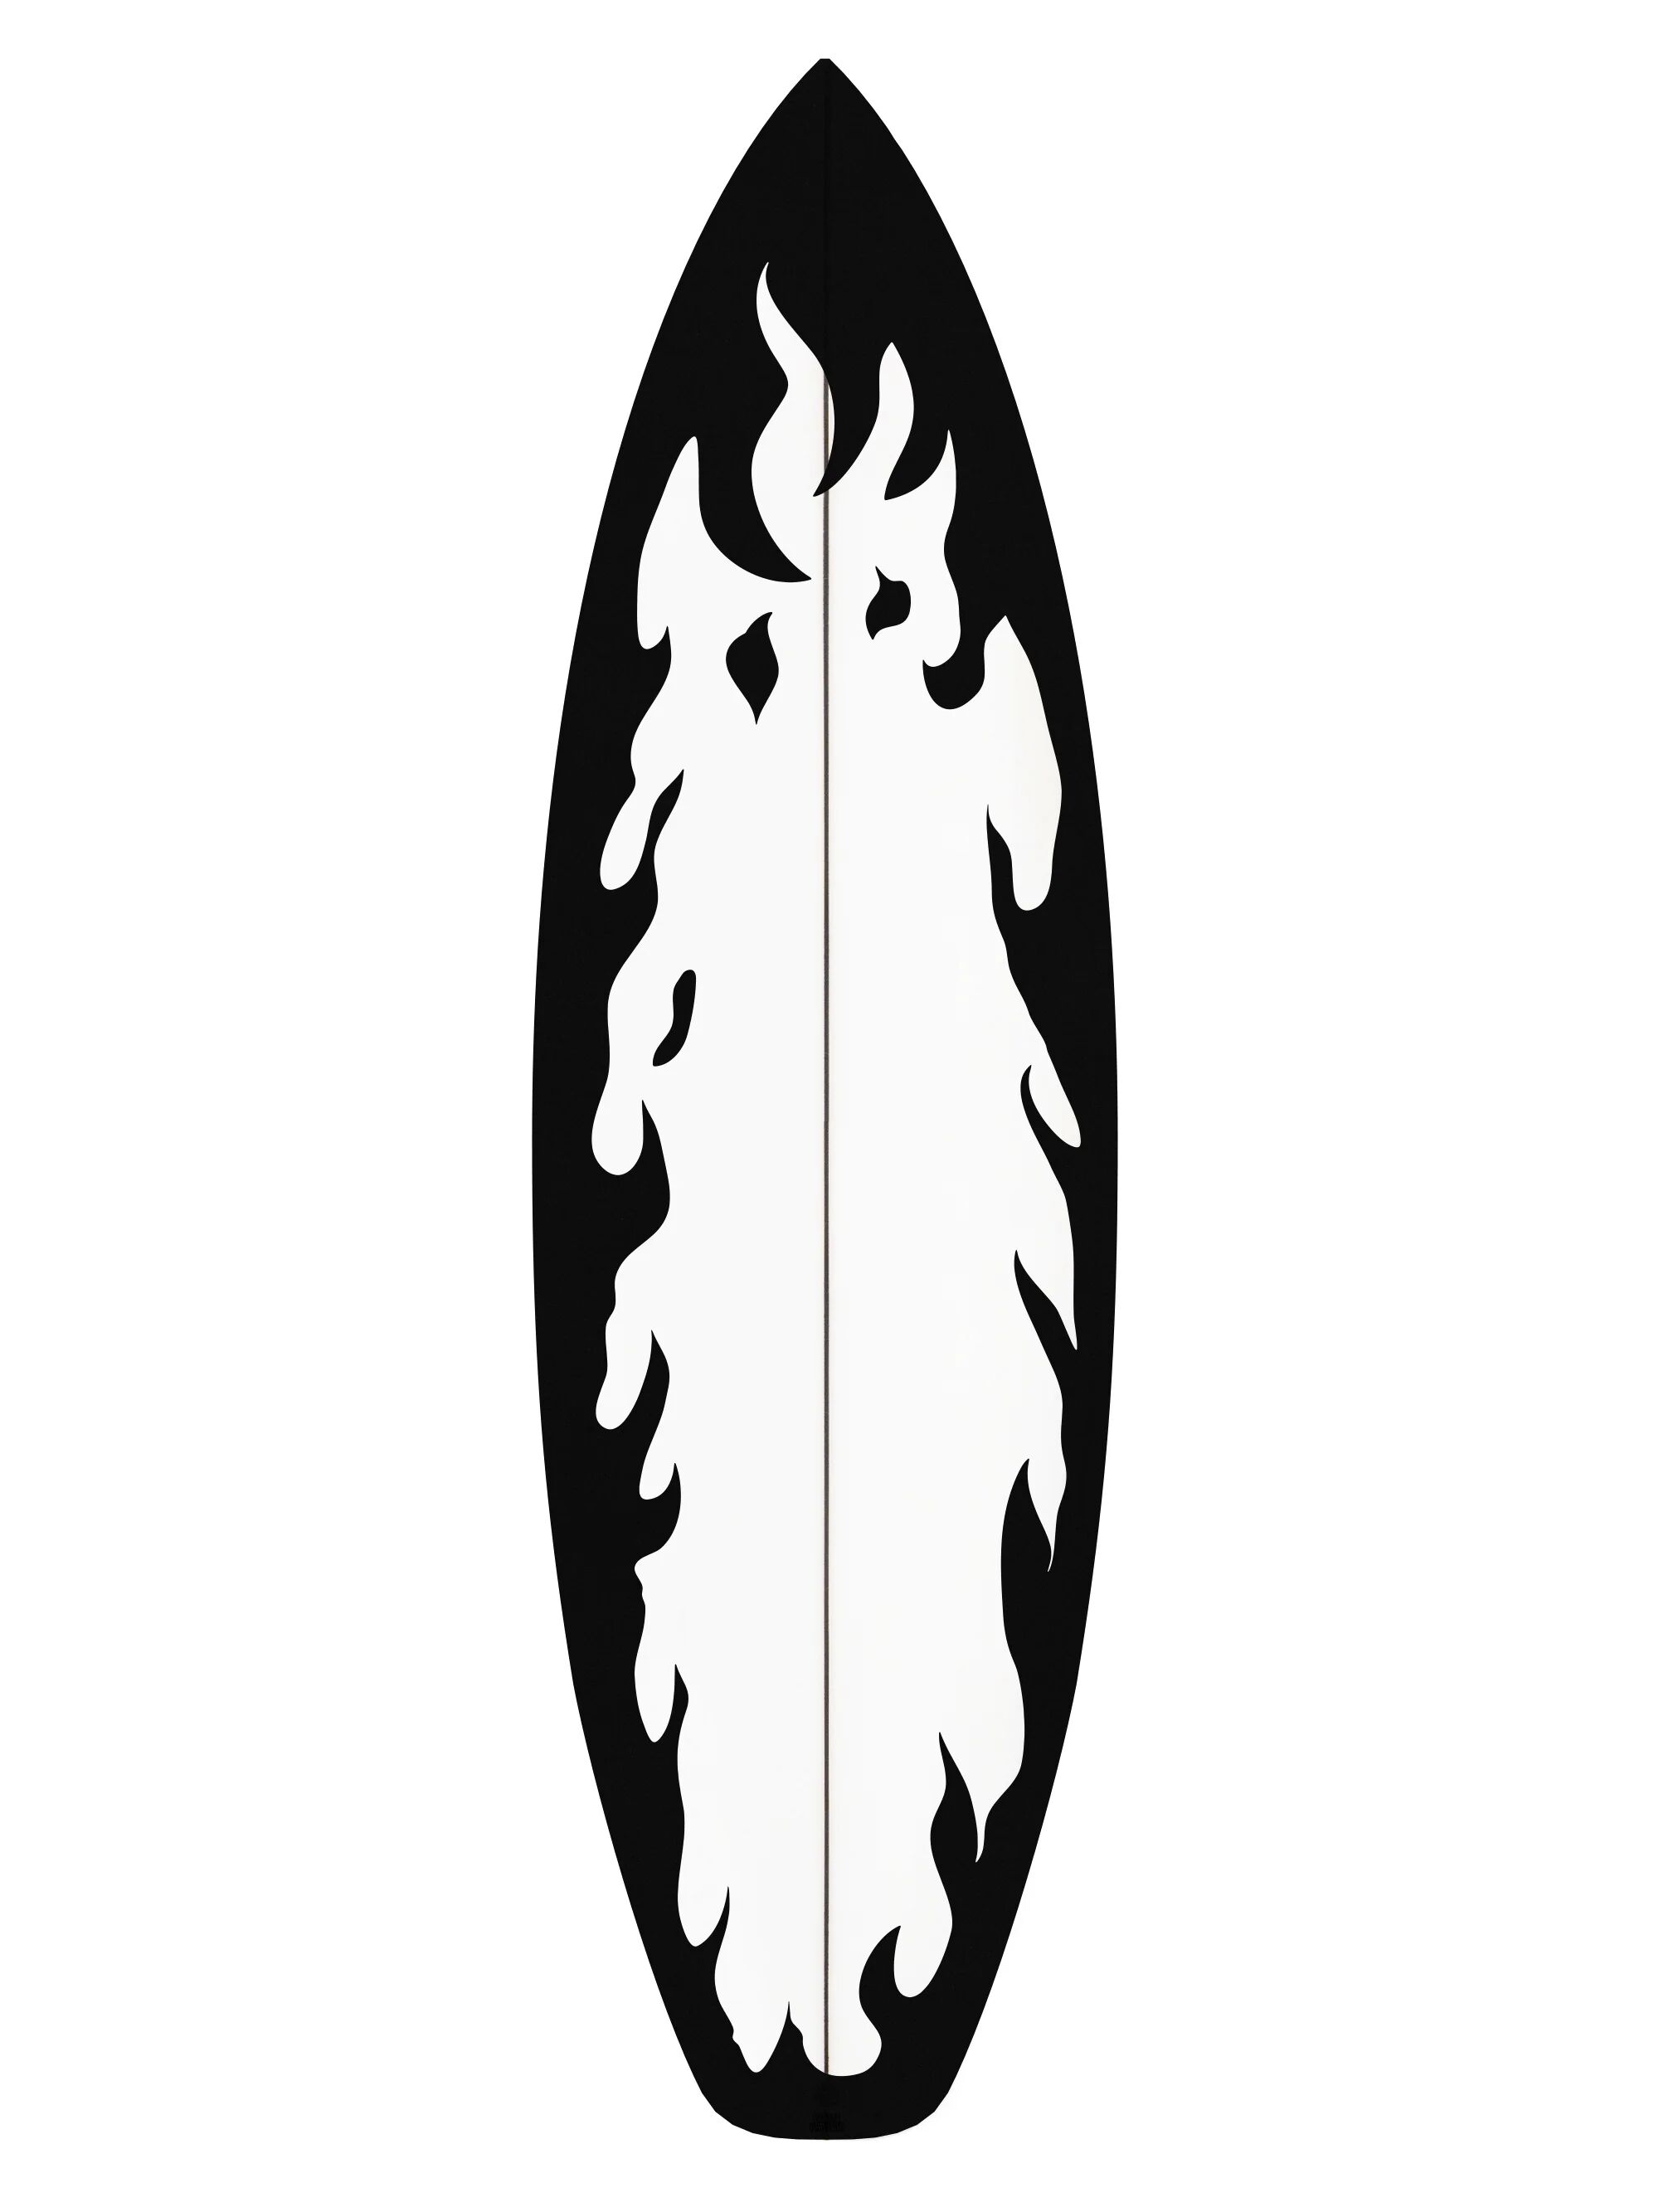 Rusty Australia Black Flames Surfboard Graphic Art